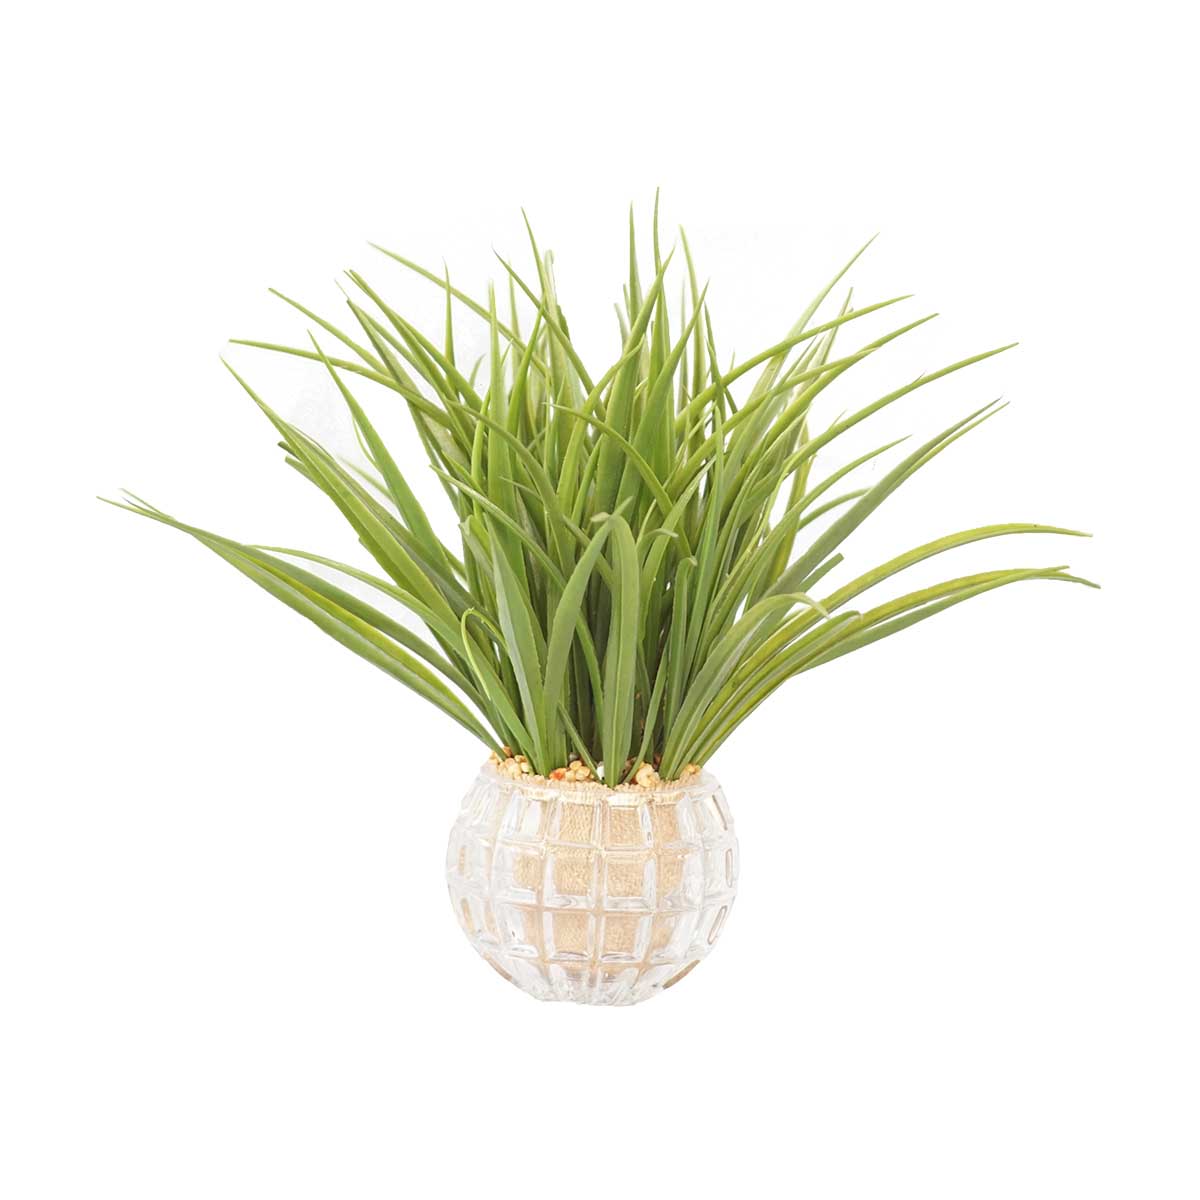 Vha102467 Plastic Grass In Glass Vases, Set Of 2